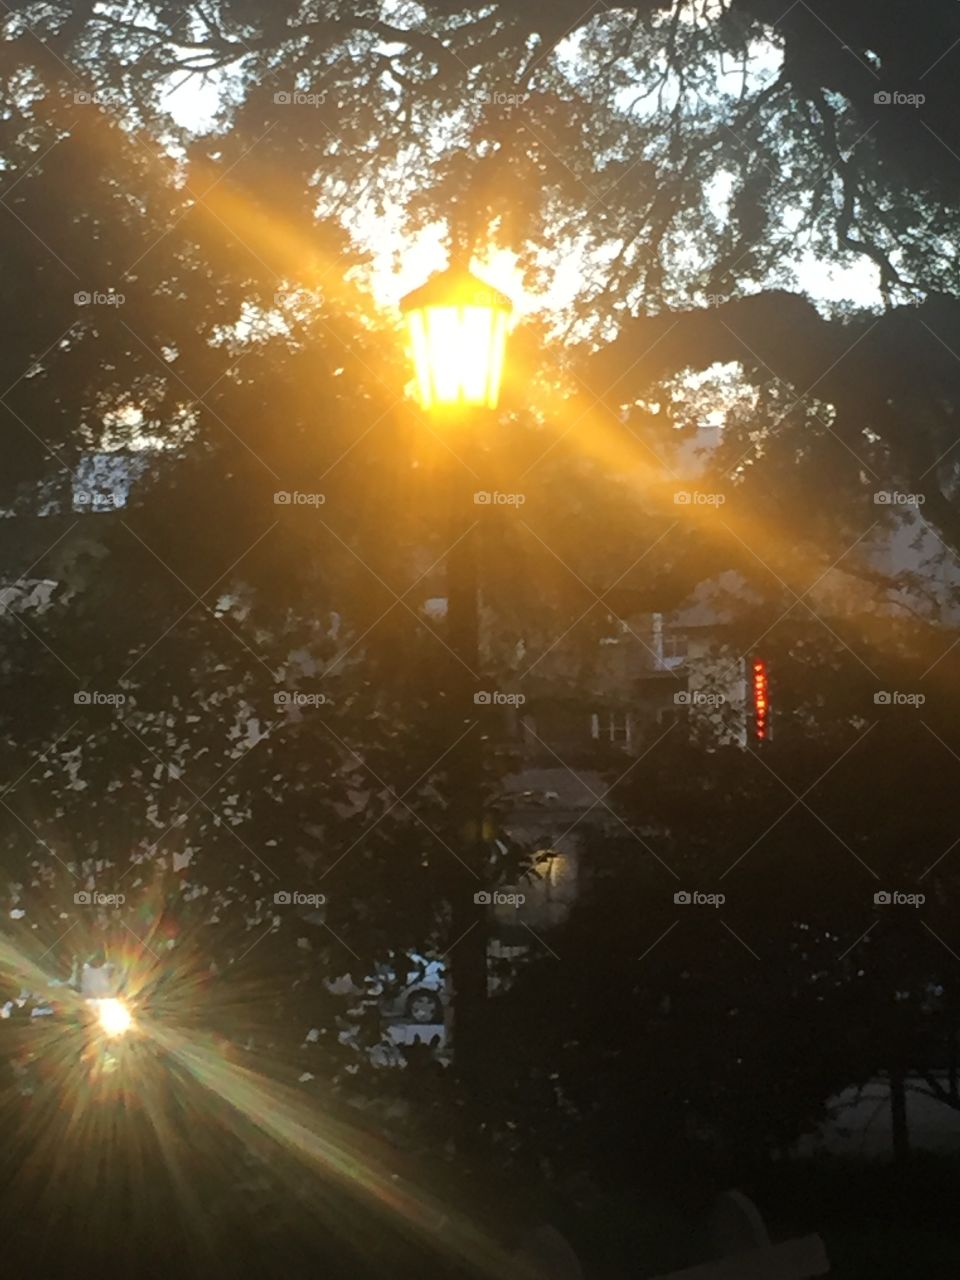 Street lamp chasing away the dark